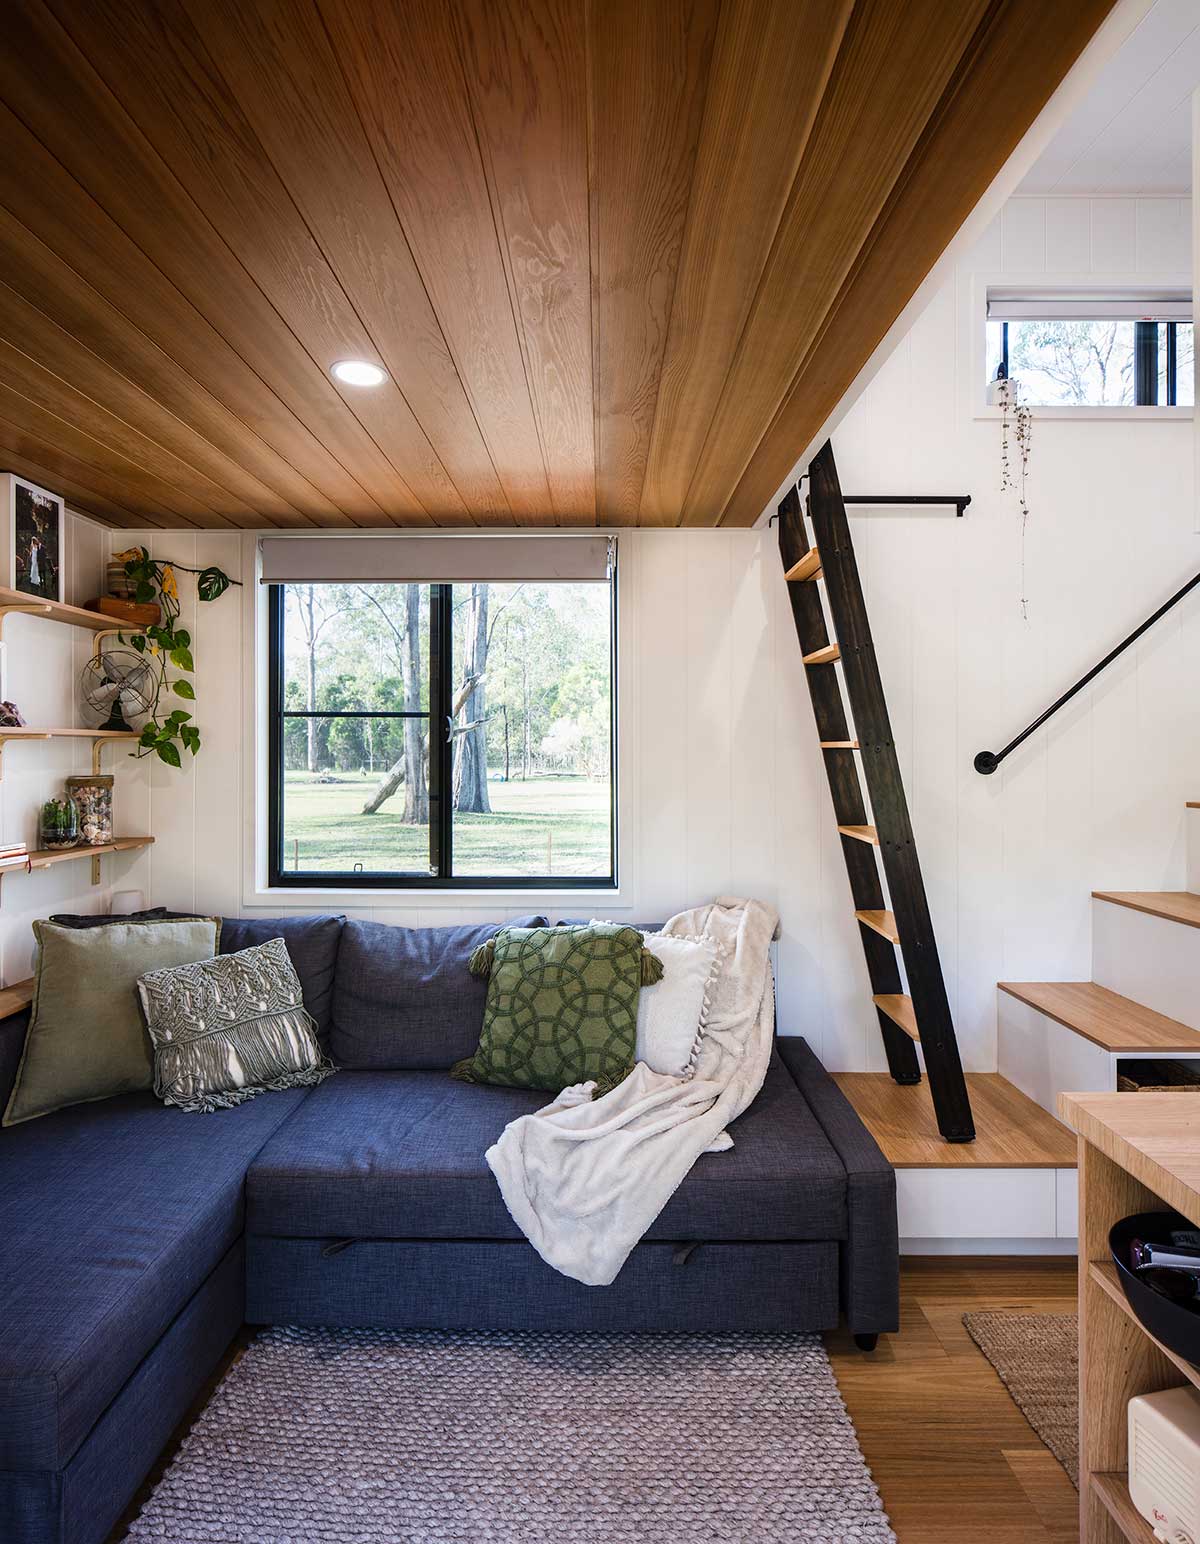 A living room space inside a tiny home